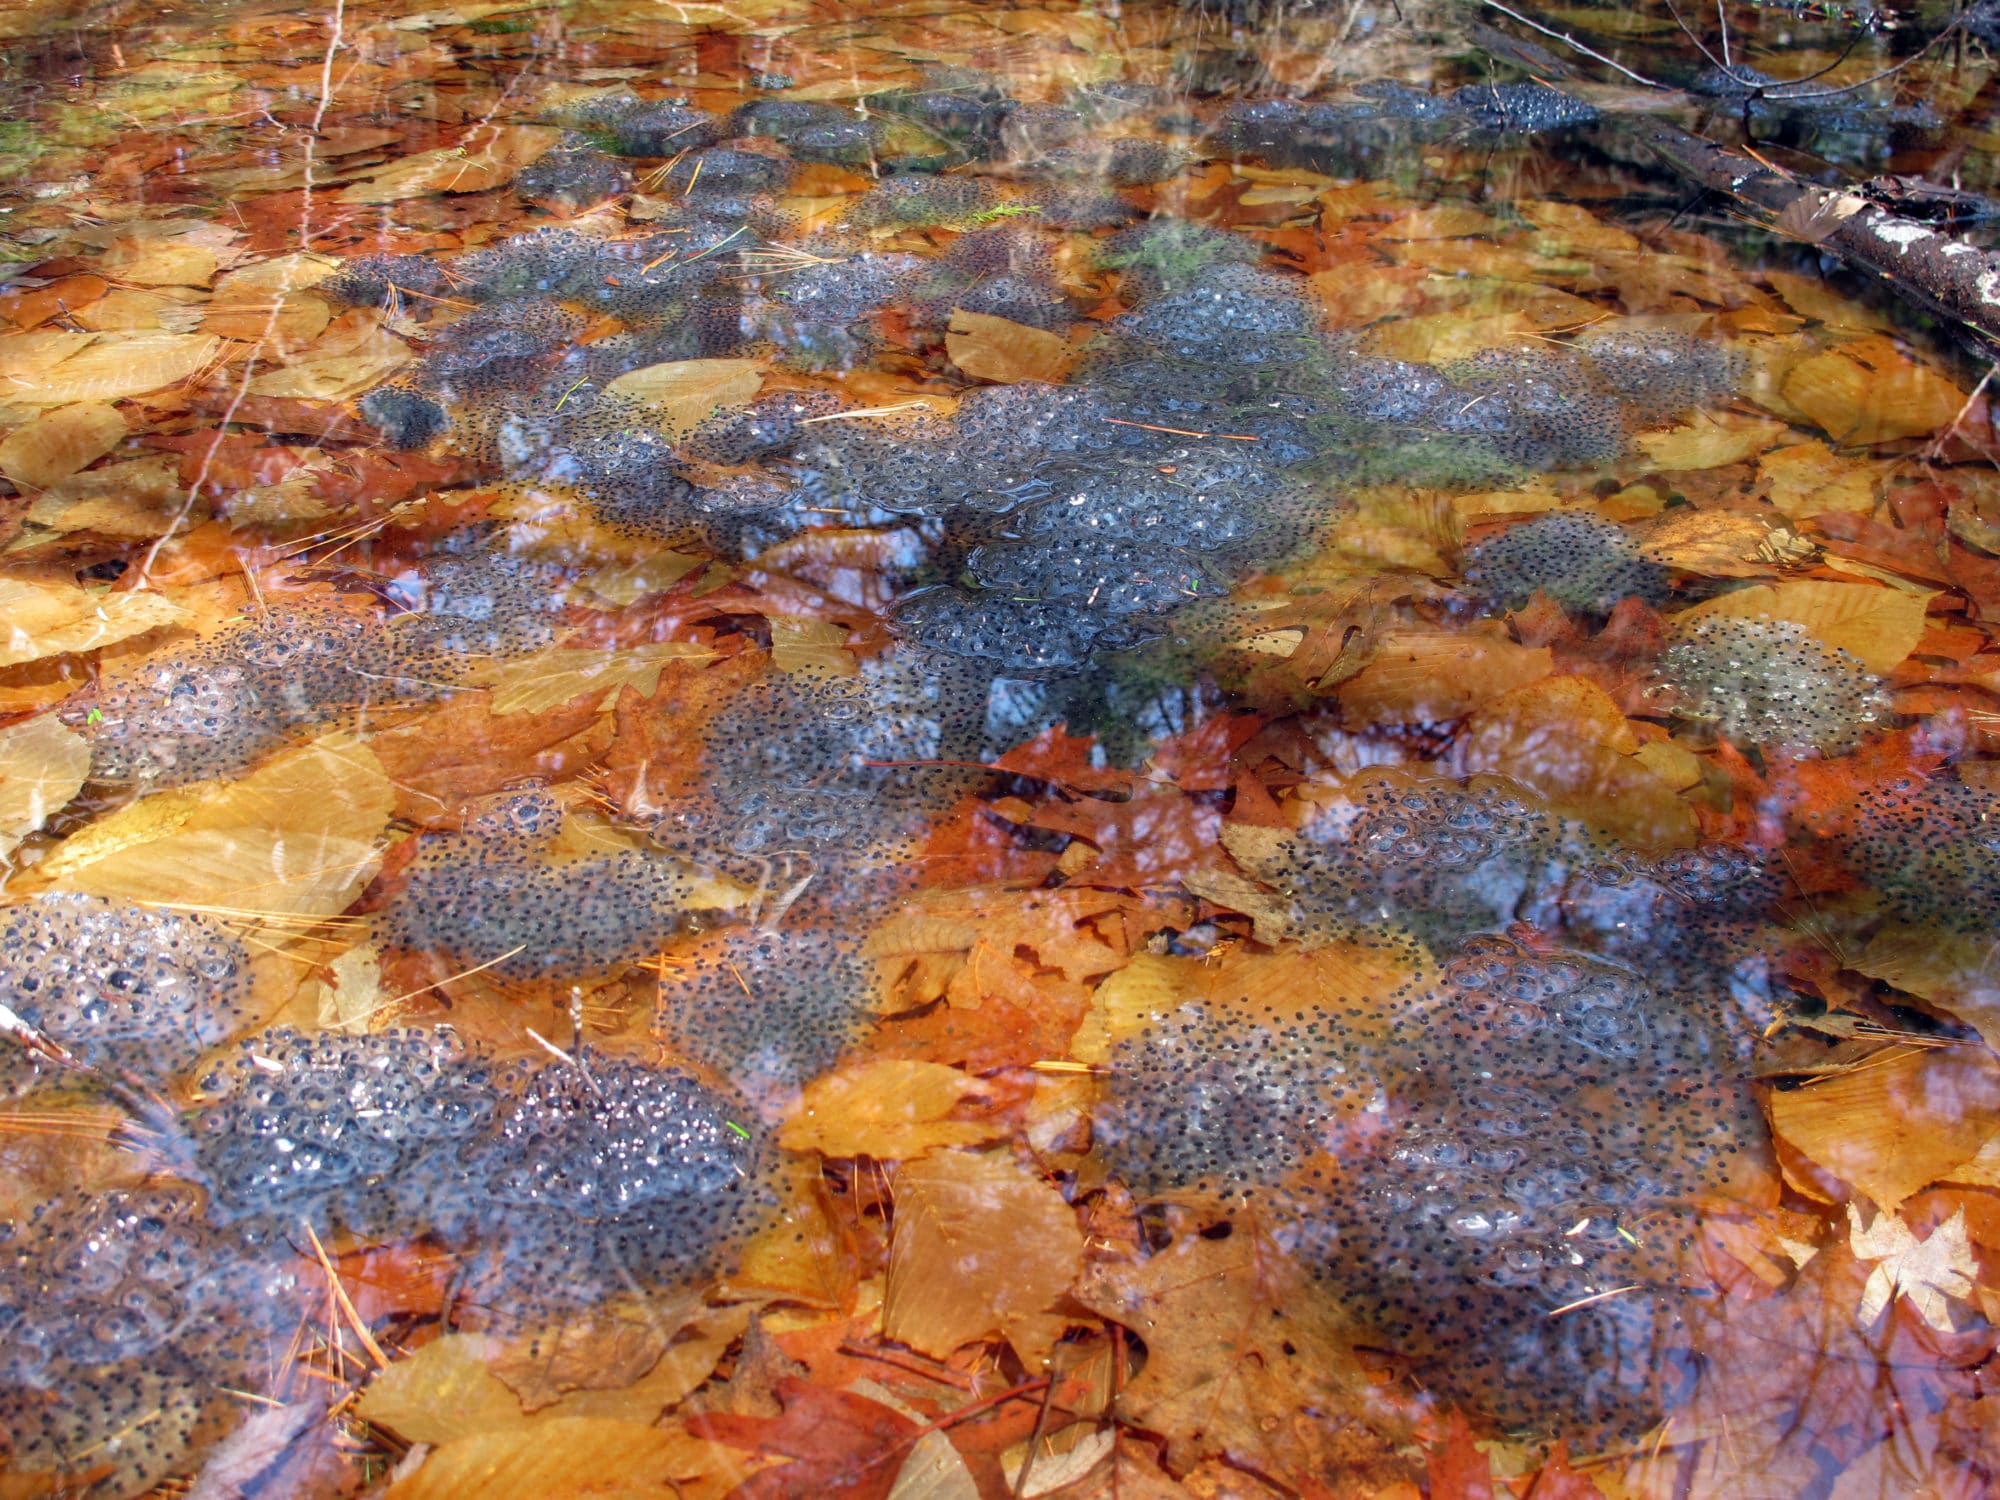 Wood frog eggs in a Keene vernal pool. (photo © Brett Amy Thelen)